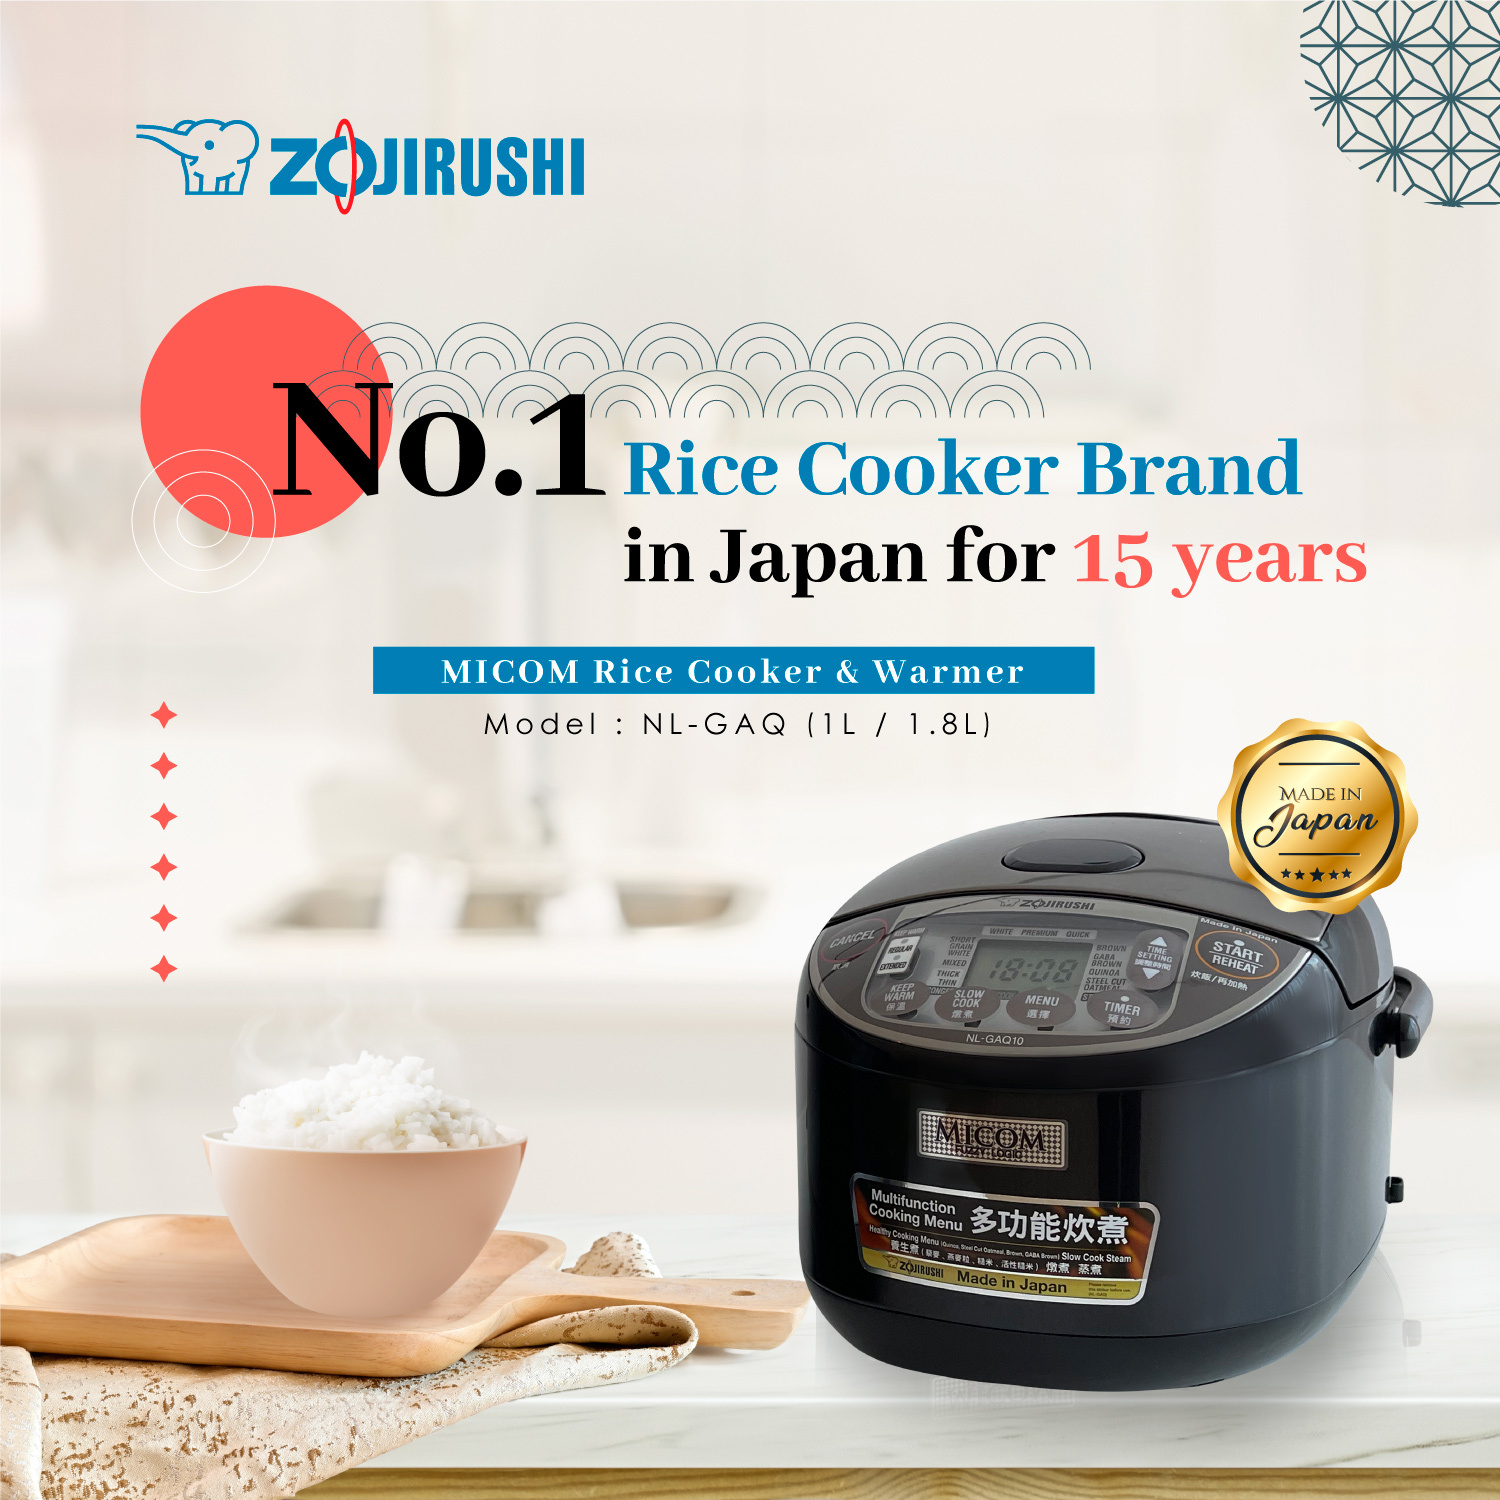 zojirushi-rice-cooker-IG.jpg